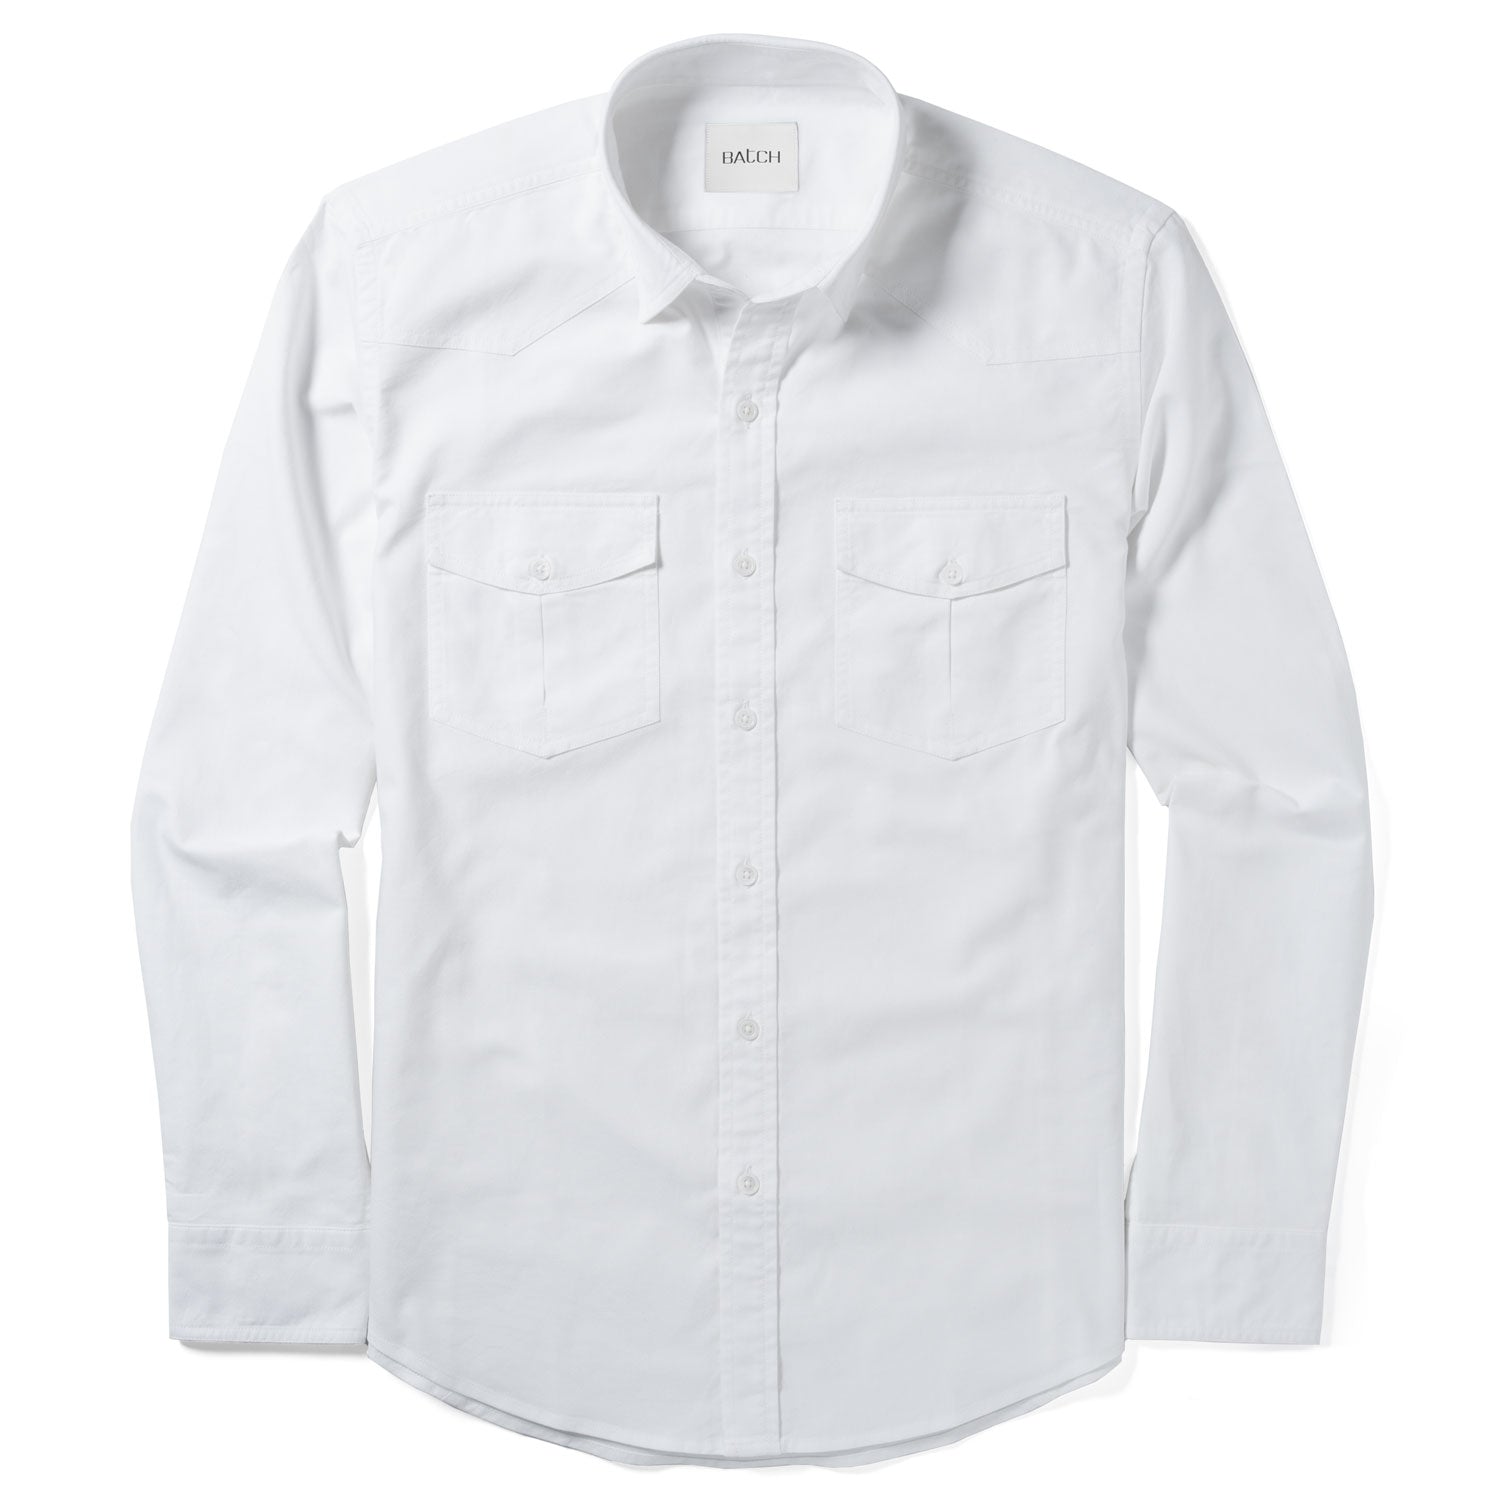 Maker Shirt – Clean White Cotton Oxford